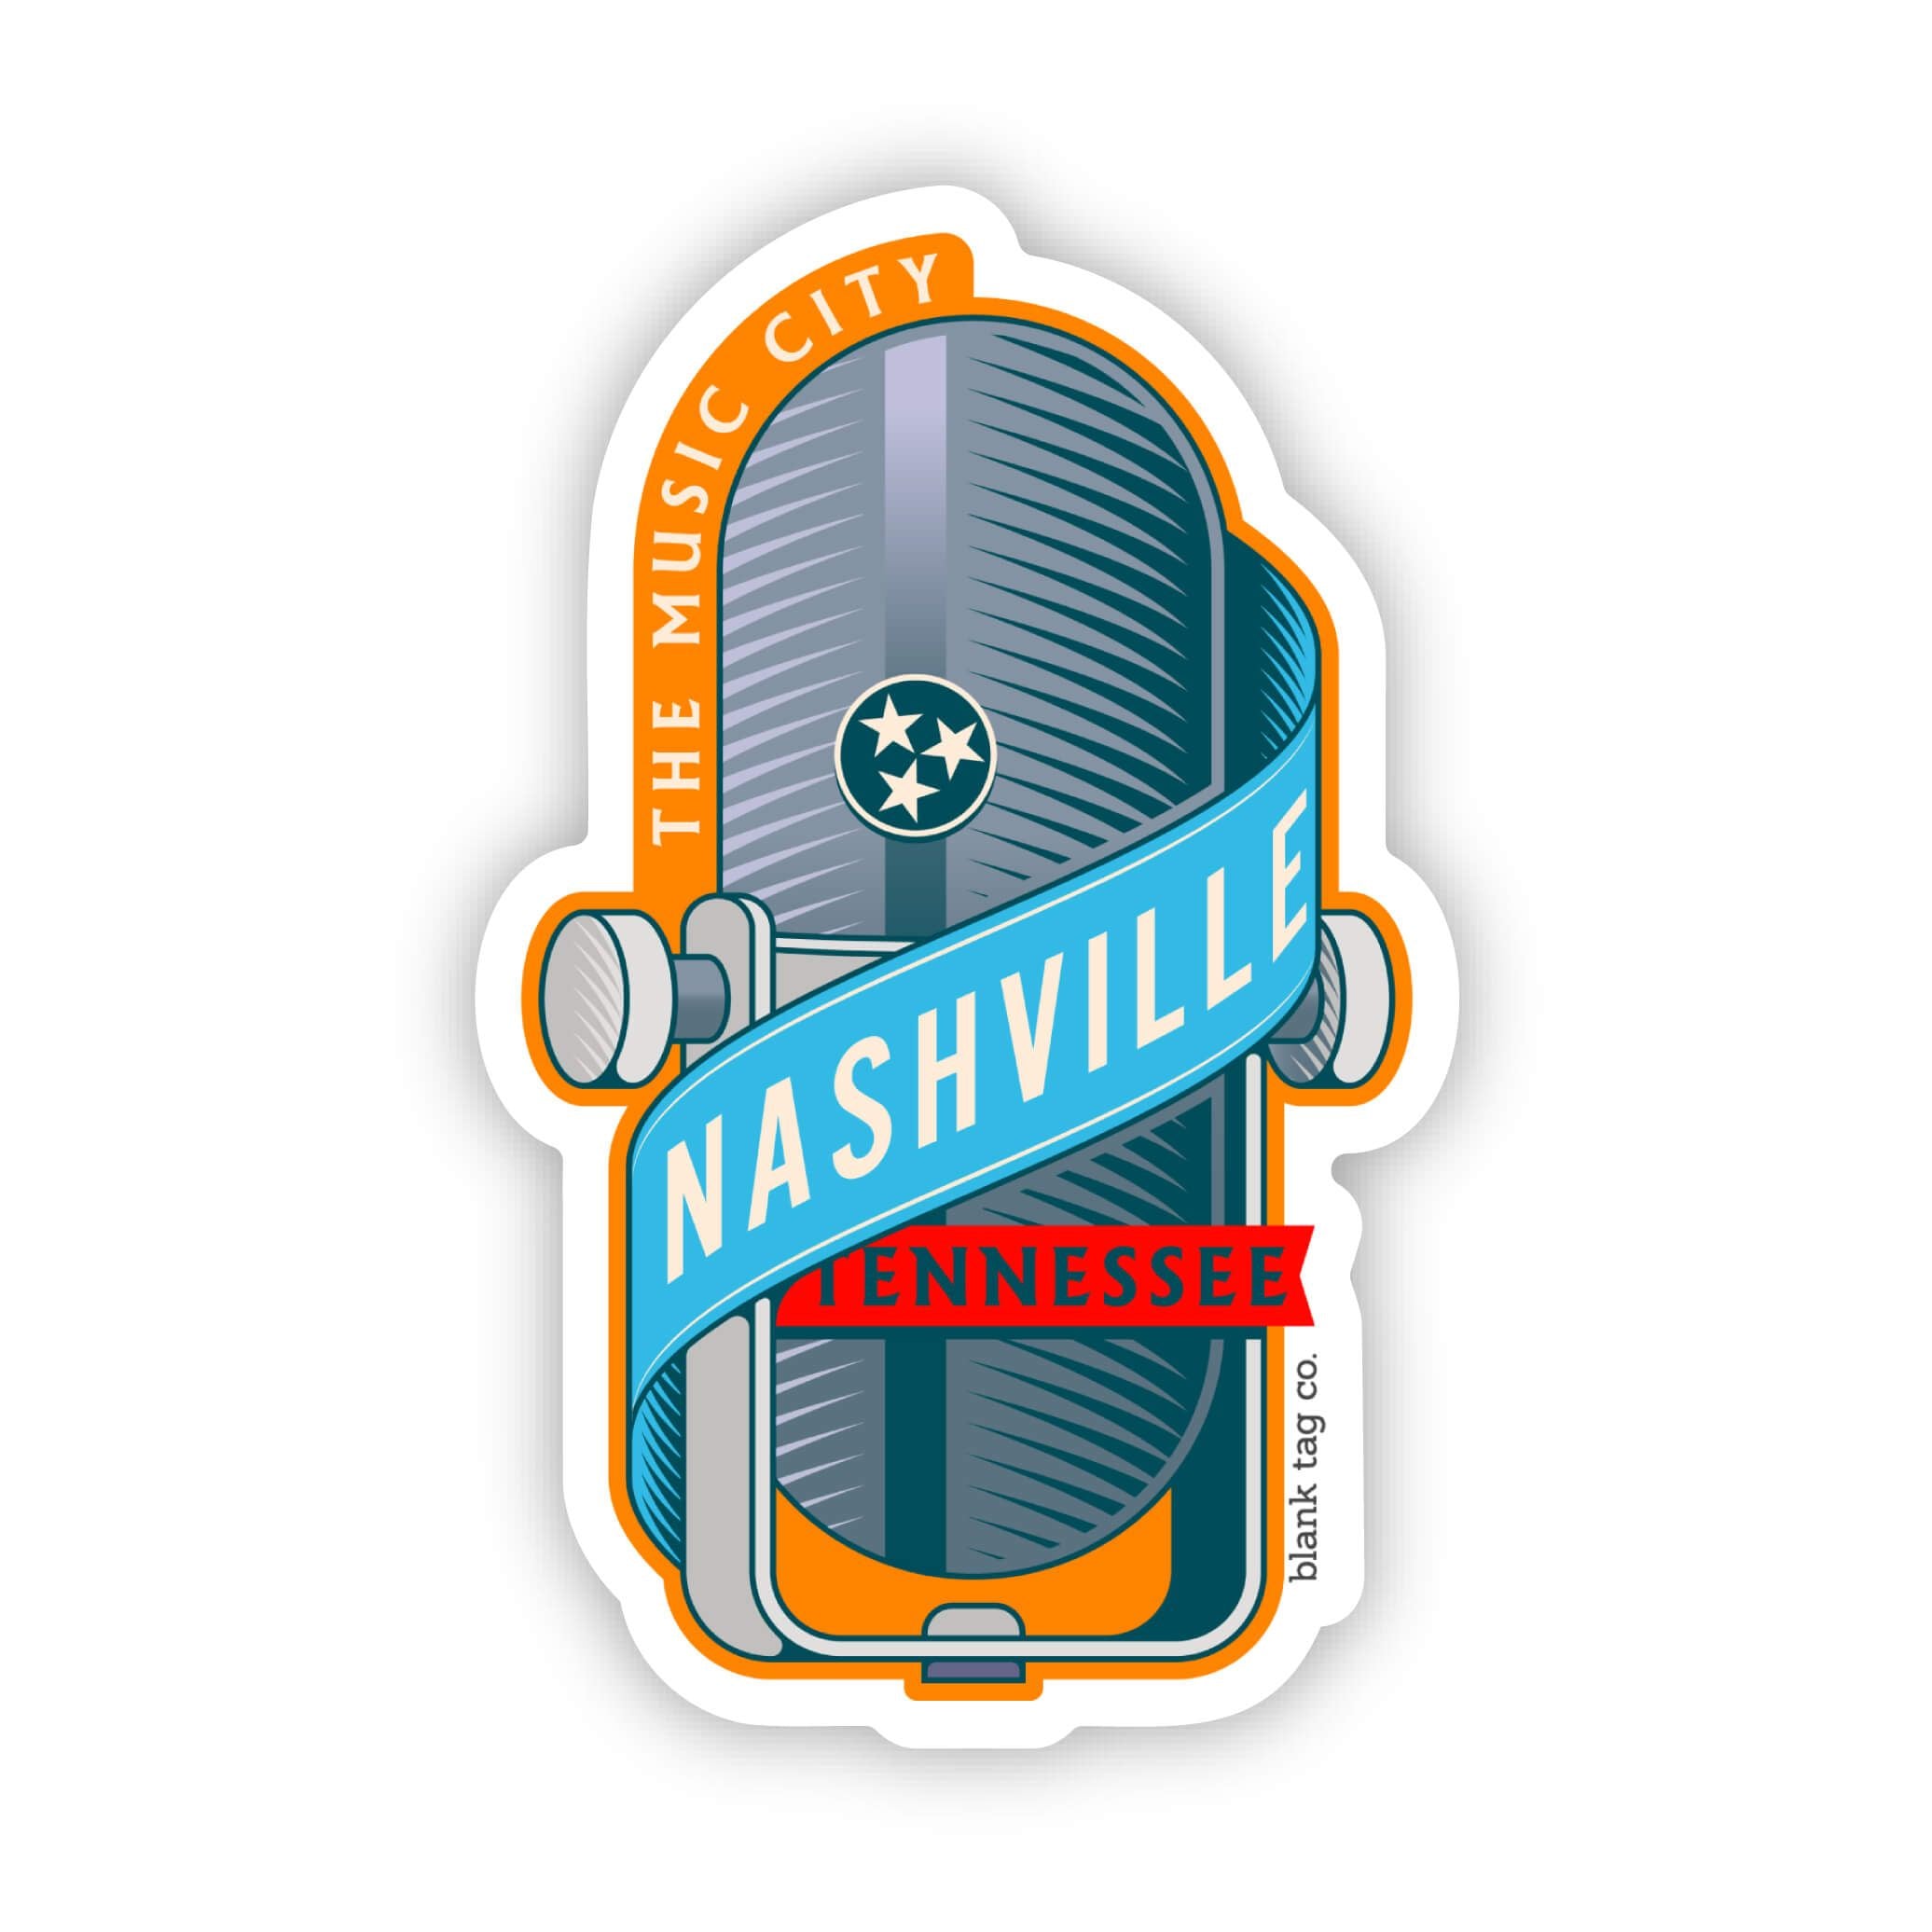 The Nashville City Badge Sticker